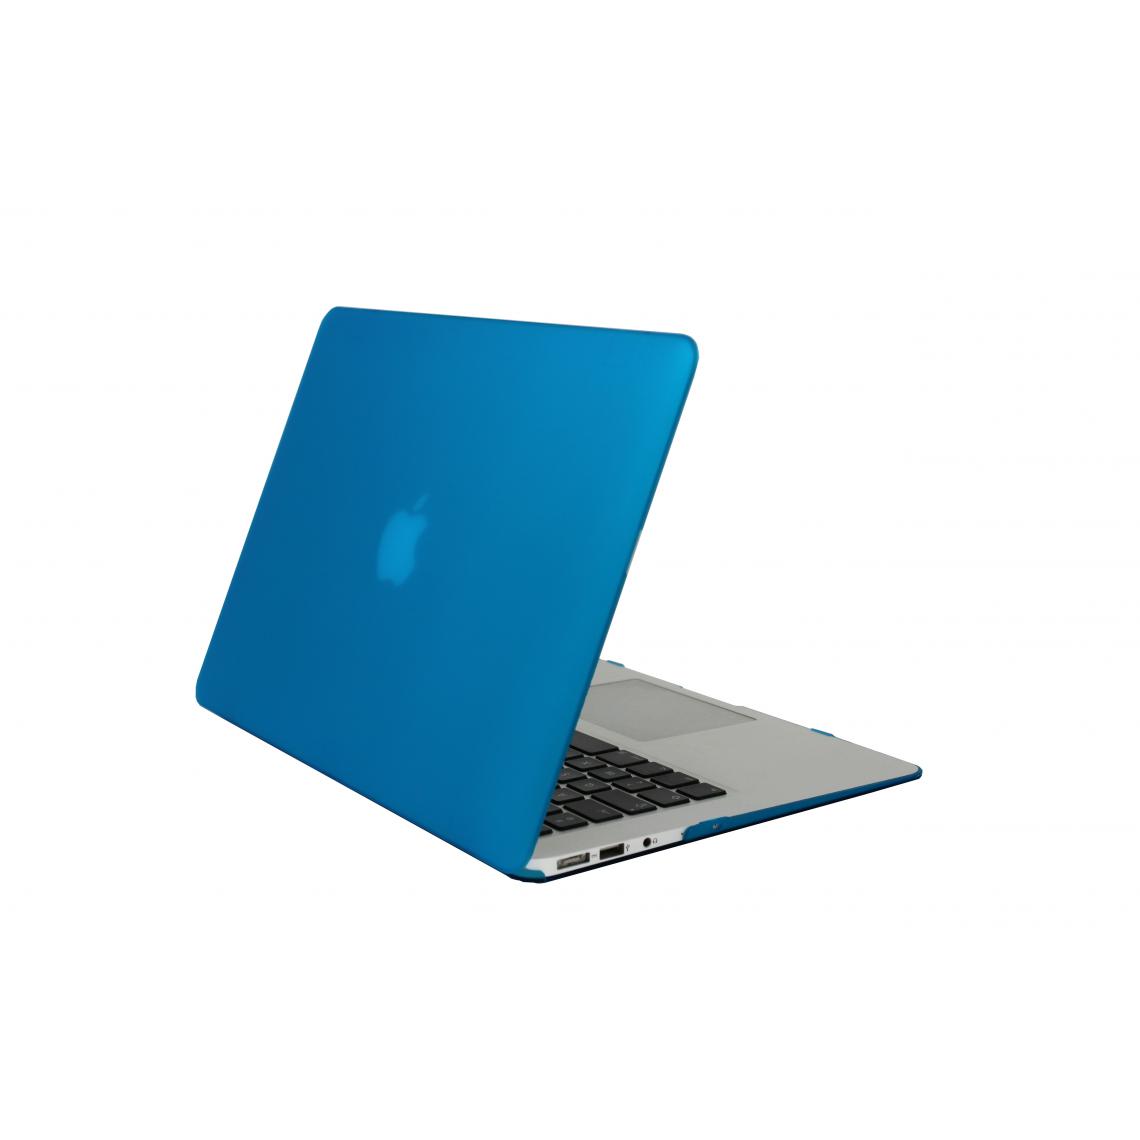 Apple - MacBook Air 13.3'' i5-5250U 4Go 128Go SSD - 2015 Coque Bleu - MacBook